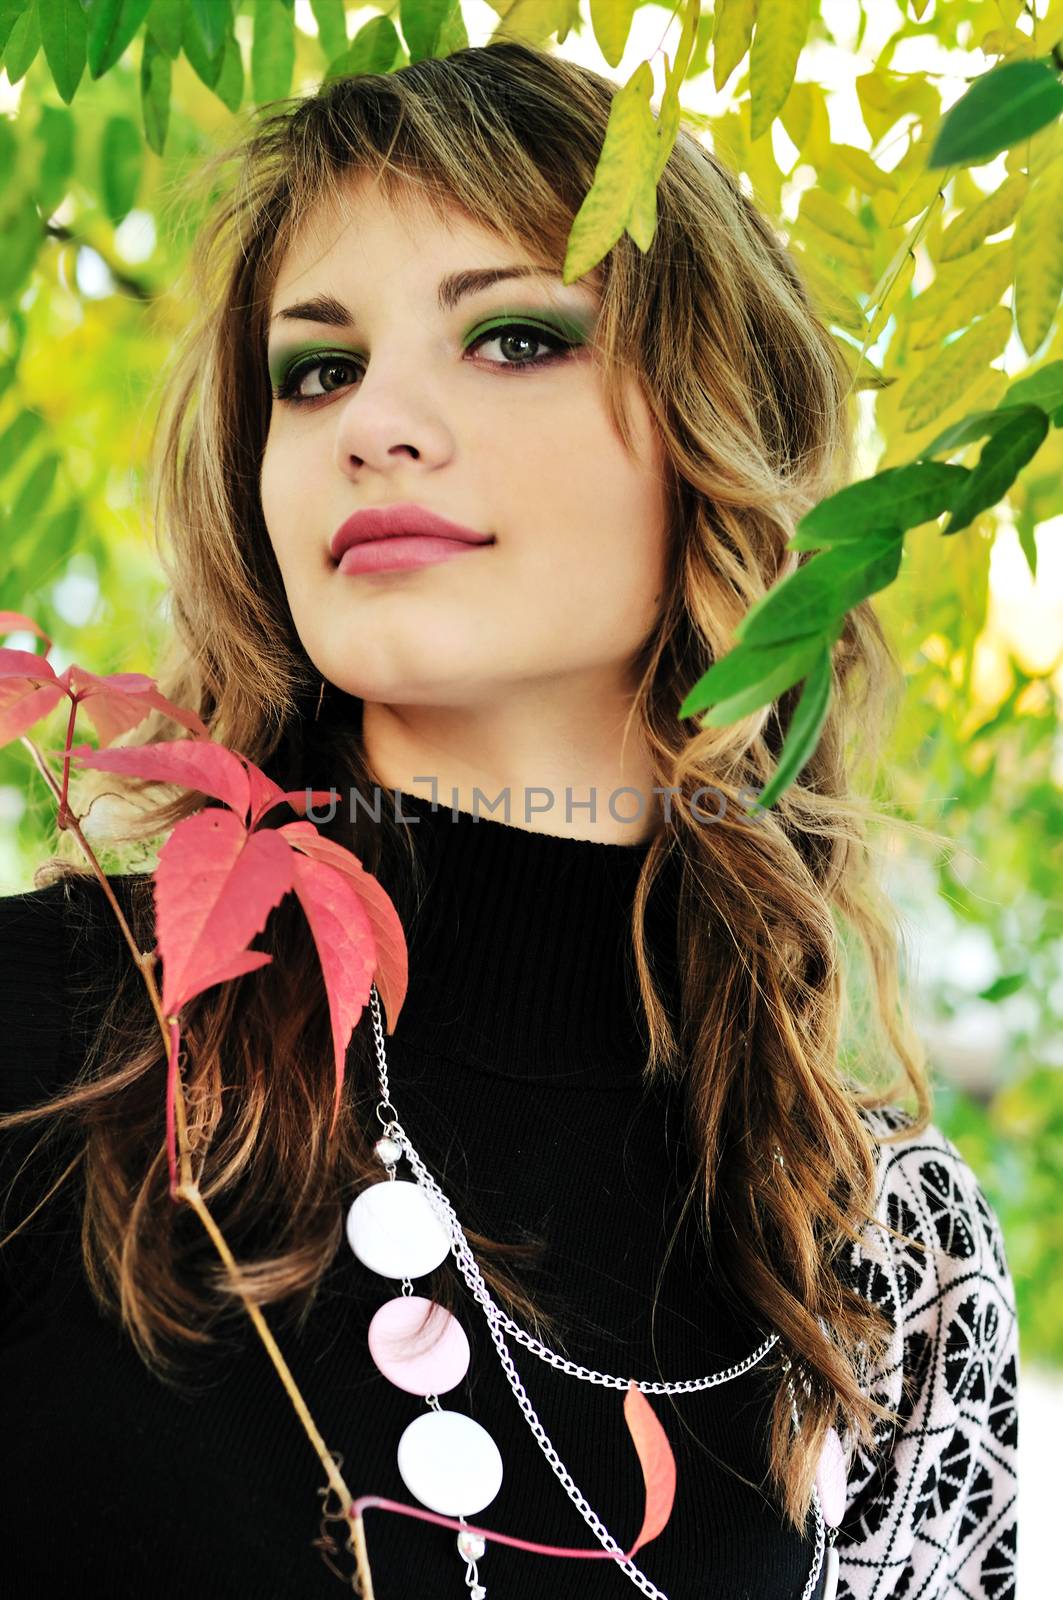 fashion autumn girl by Reana